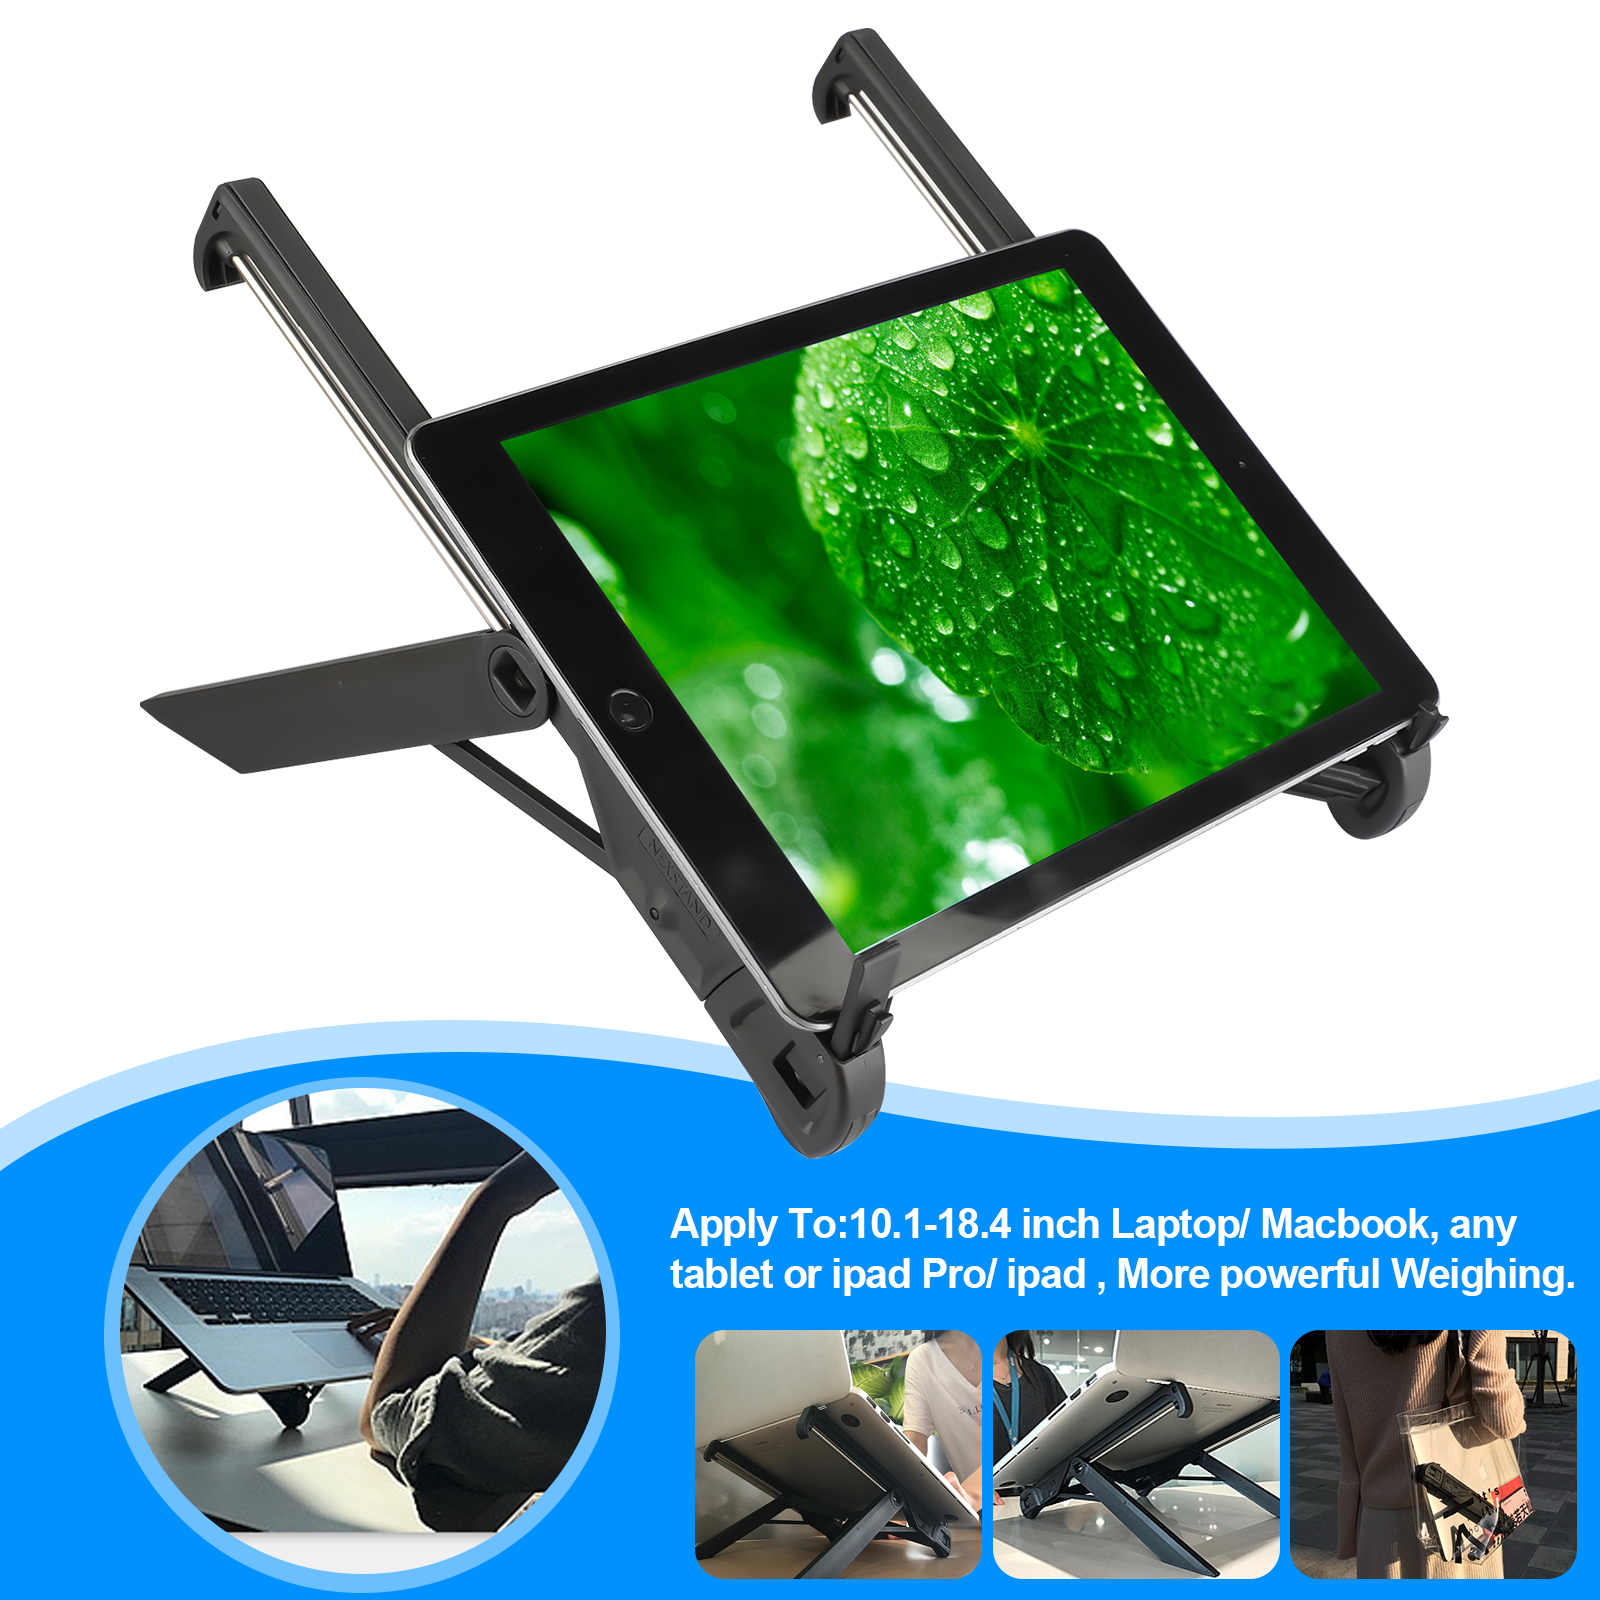 EEEkit Universal Laptop Stand with Height Adjustment, Ventilated Desktop Holder Supports iPad, Tablet, MacBook, Black - image 4 of 9